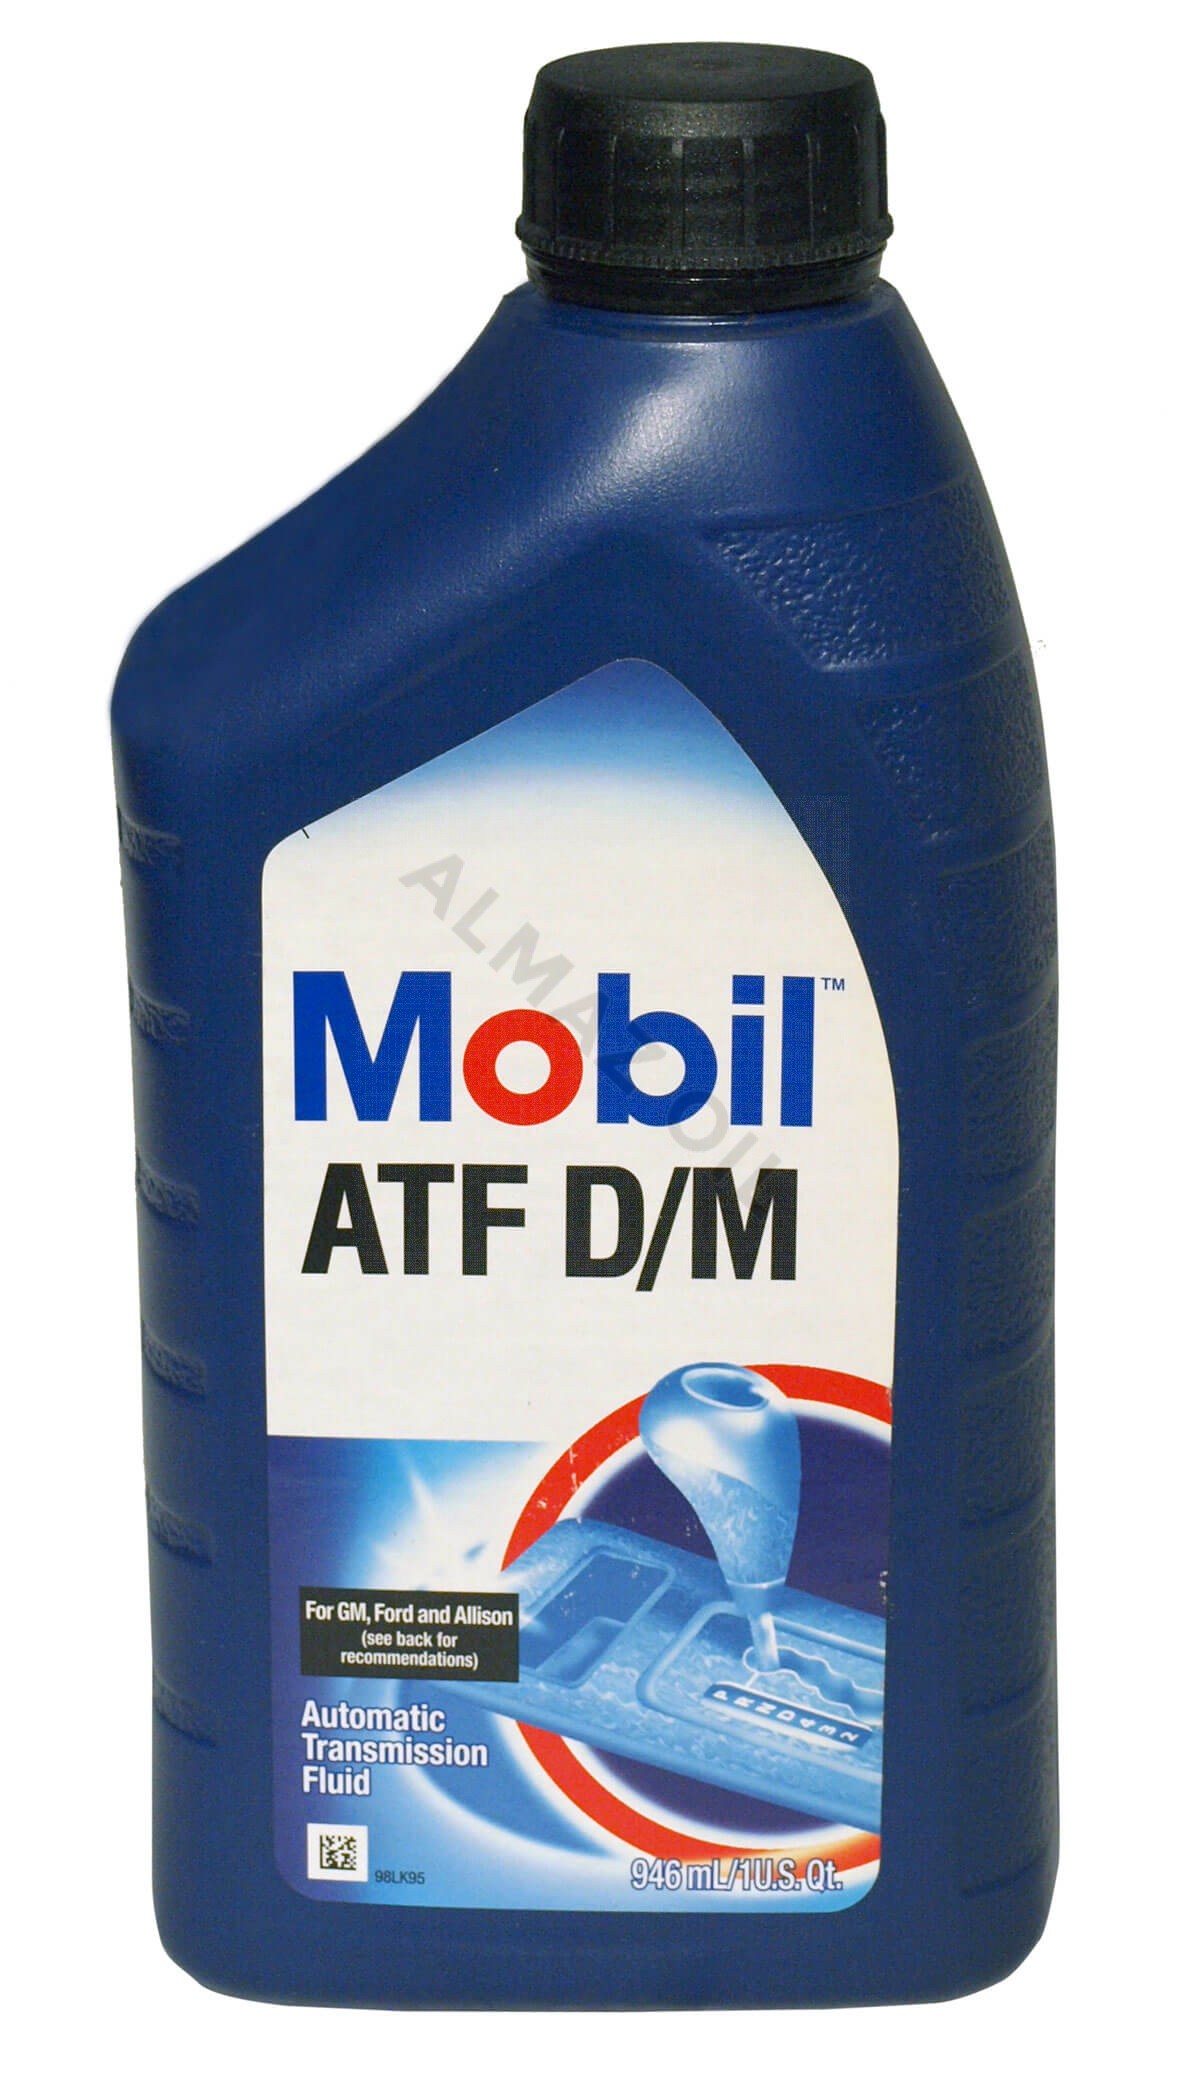 Mobil ATF D/M